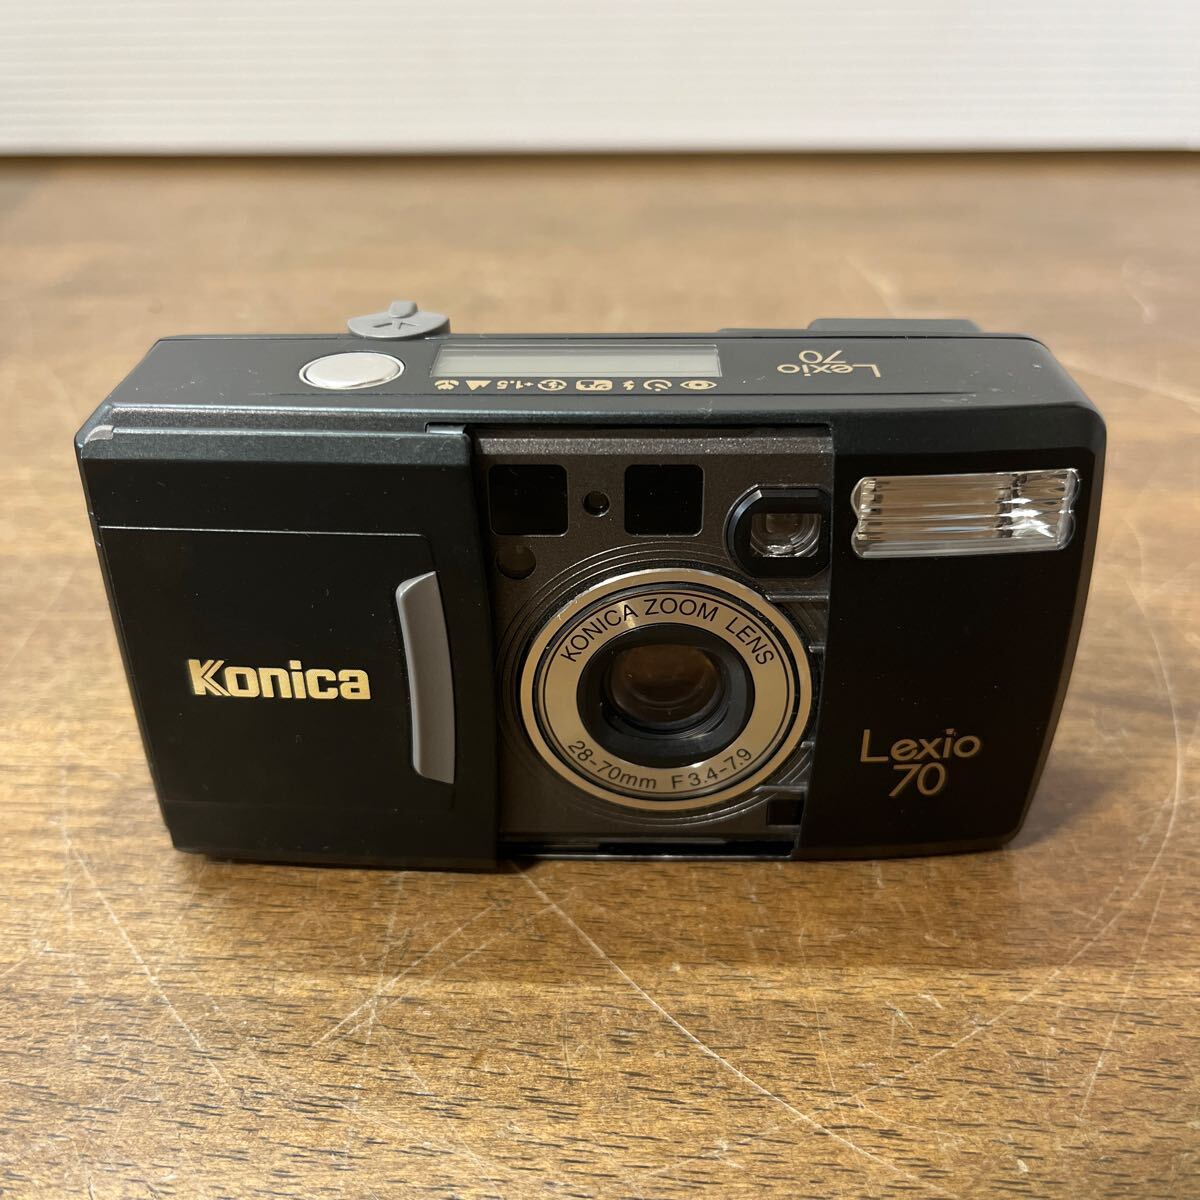 Konica Lexio 70 35mm 28-70mm f/3.4-7.9 フィルムカメラ レクシオ カメラ コニカ レトロ ケース付き (3-2_画像3